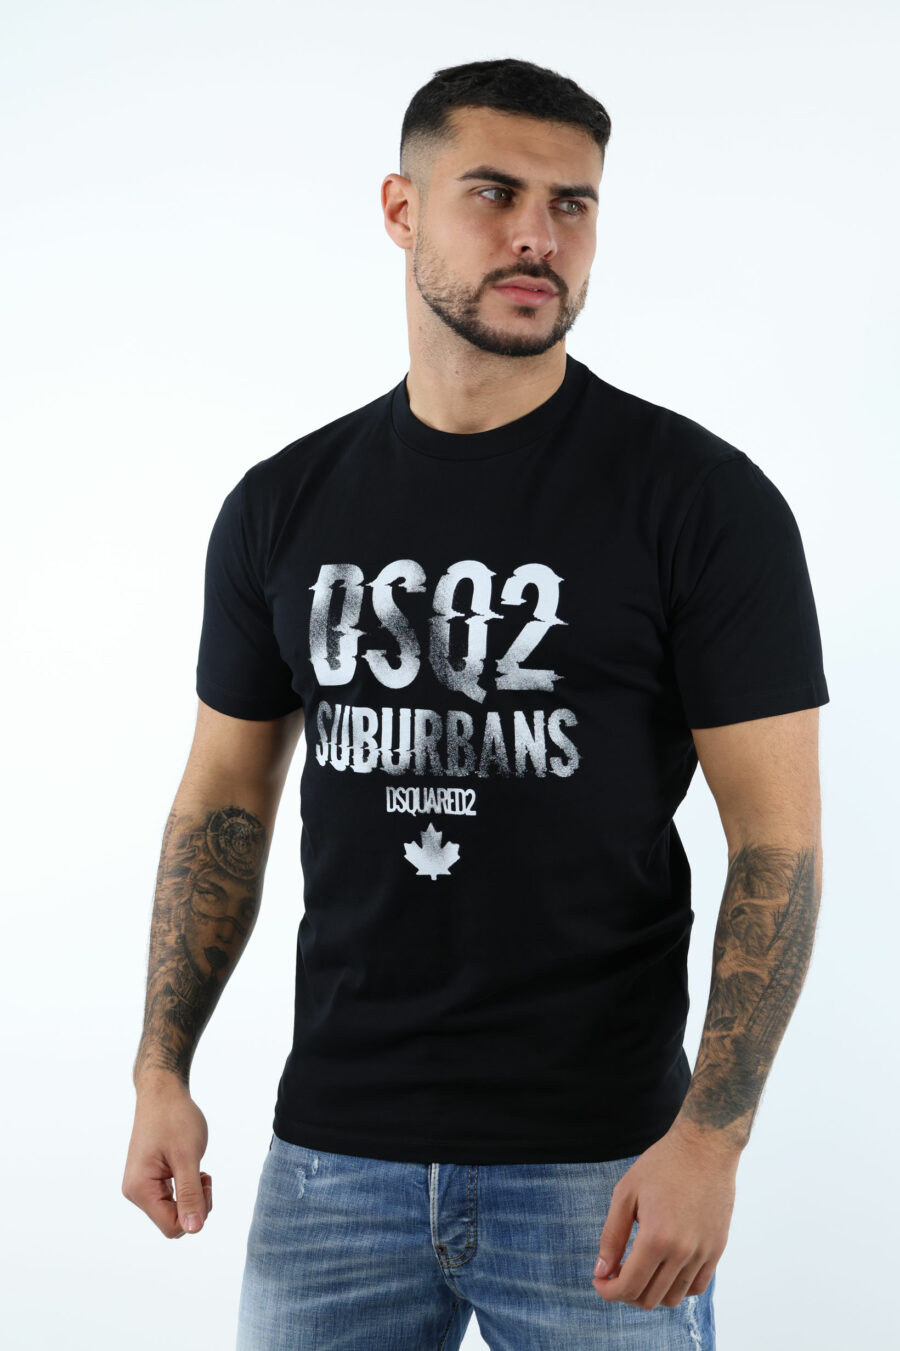 Schwarzes T-Shirt mit weißem "suburbans" Maxilogo - 106888